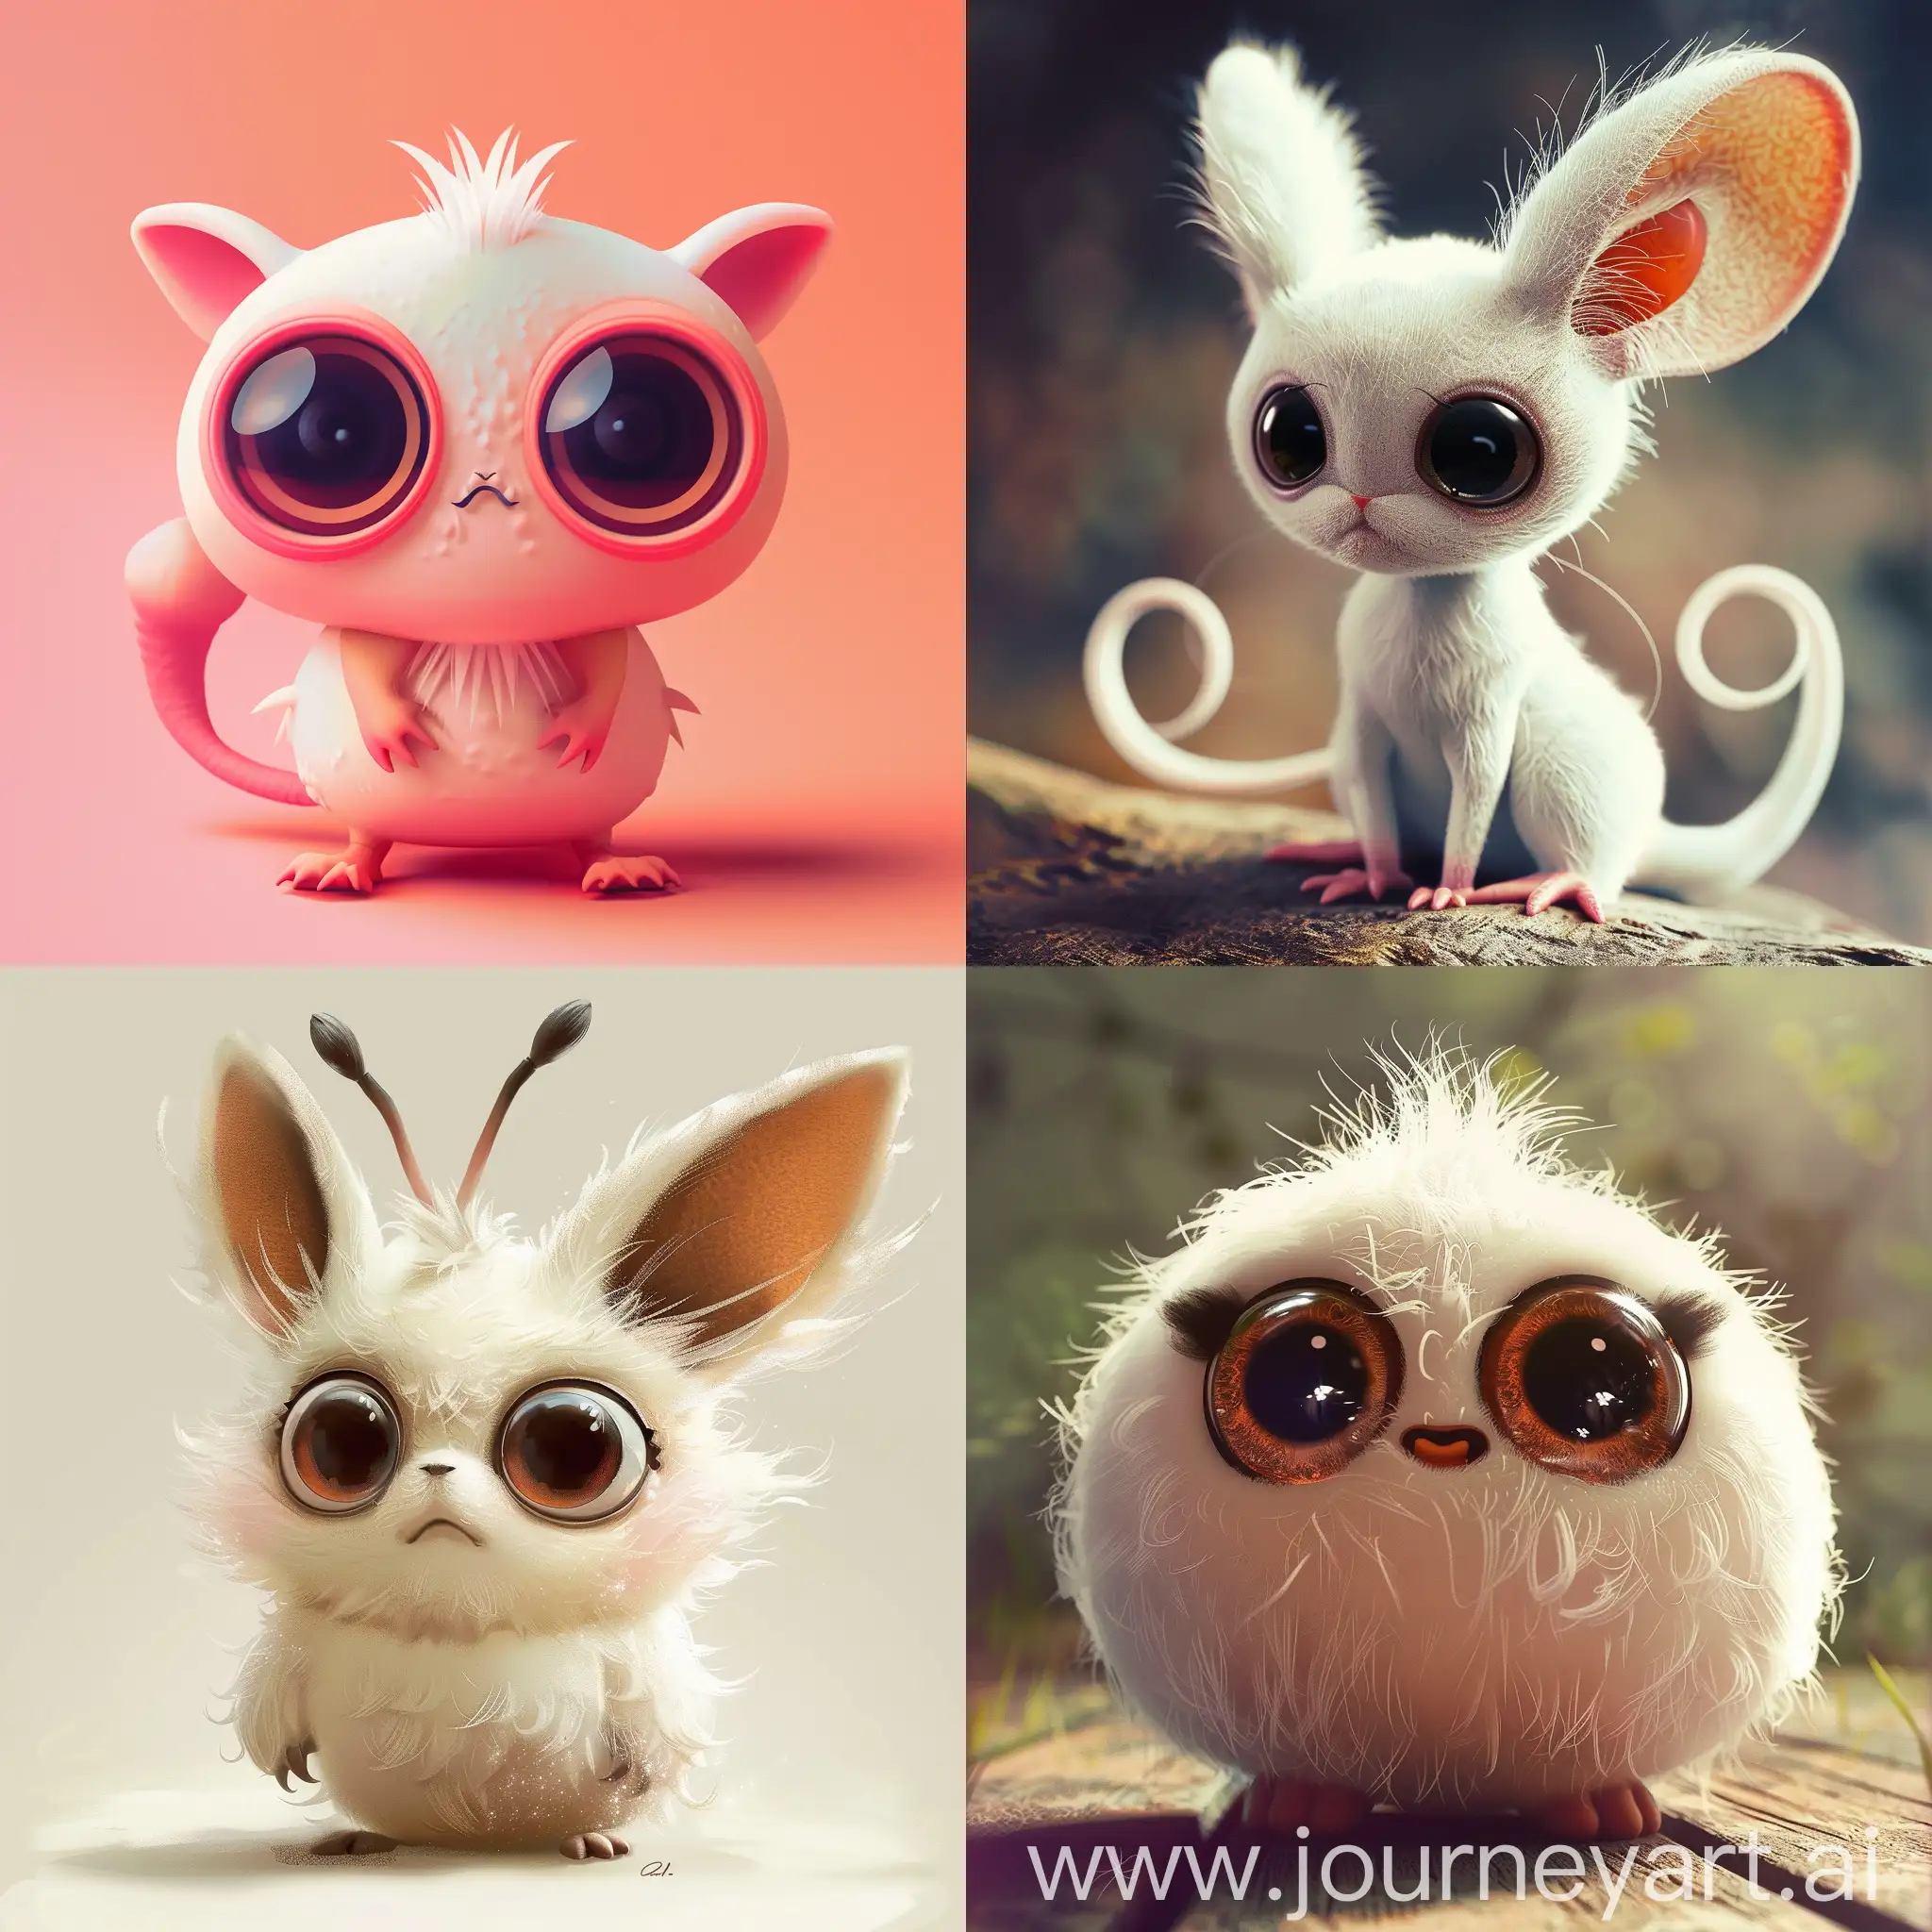 cute creature like pokemon, toon style, big eyes